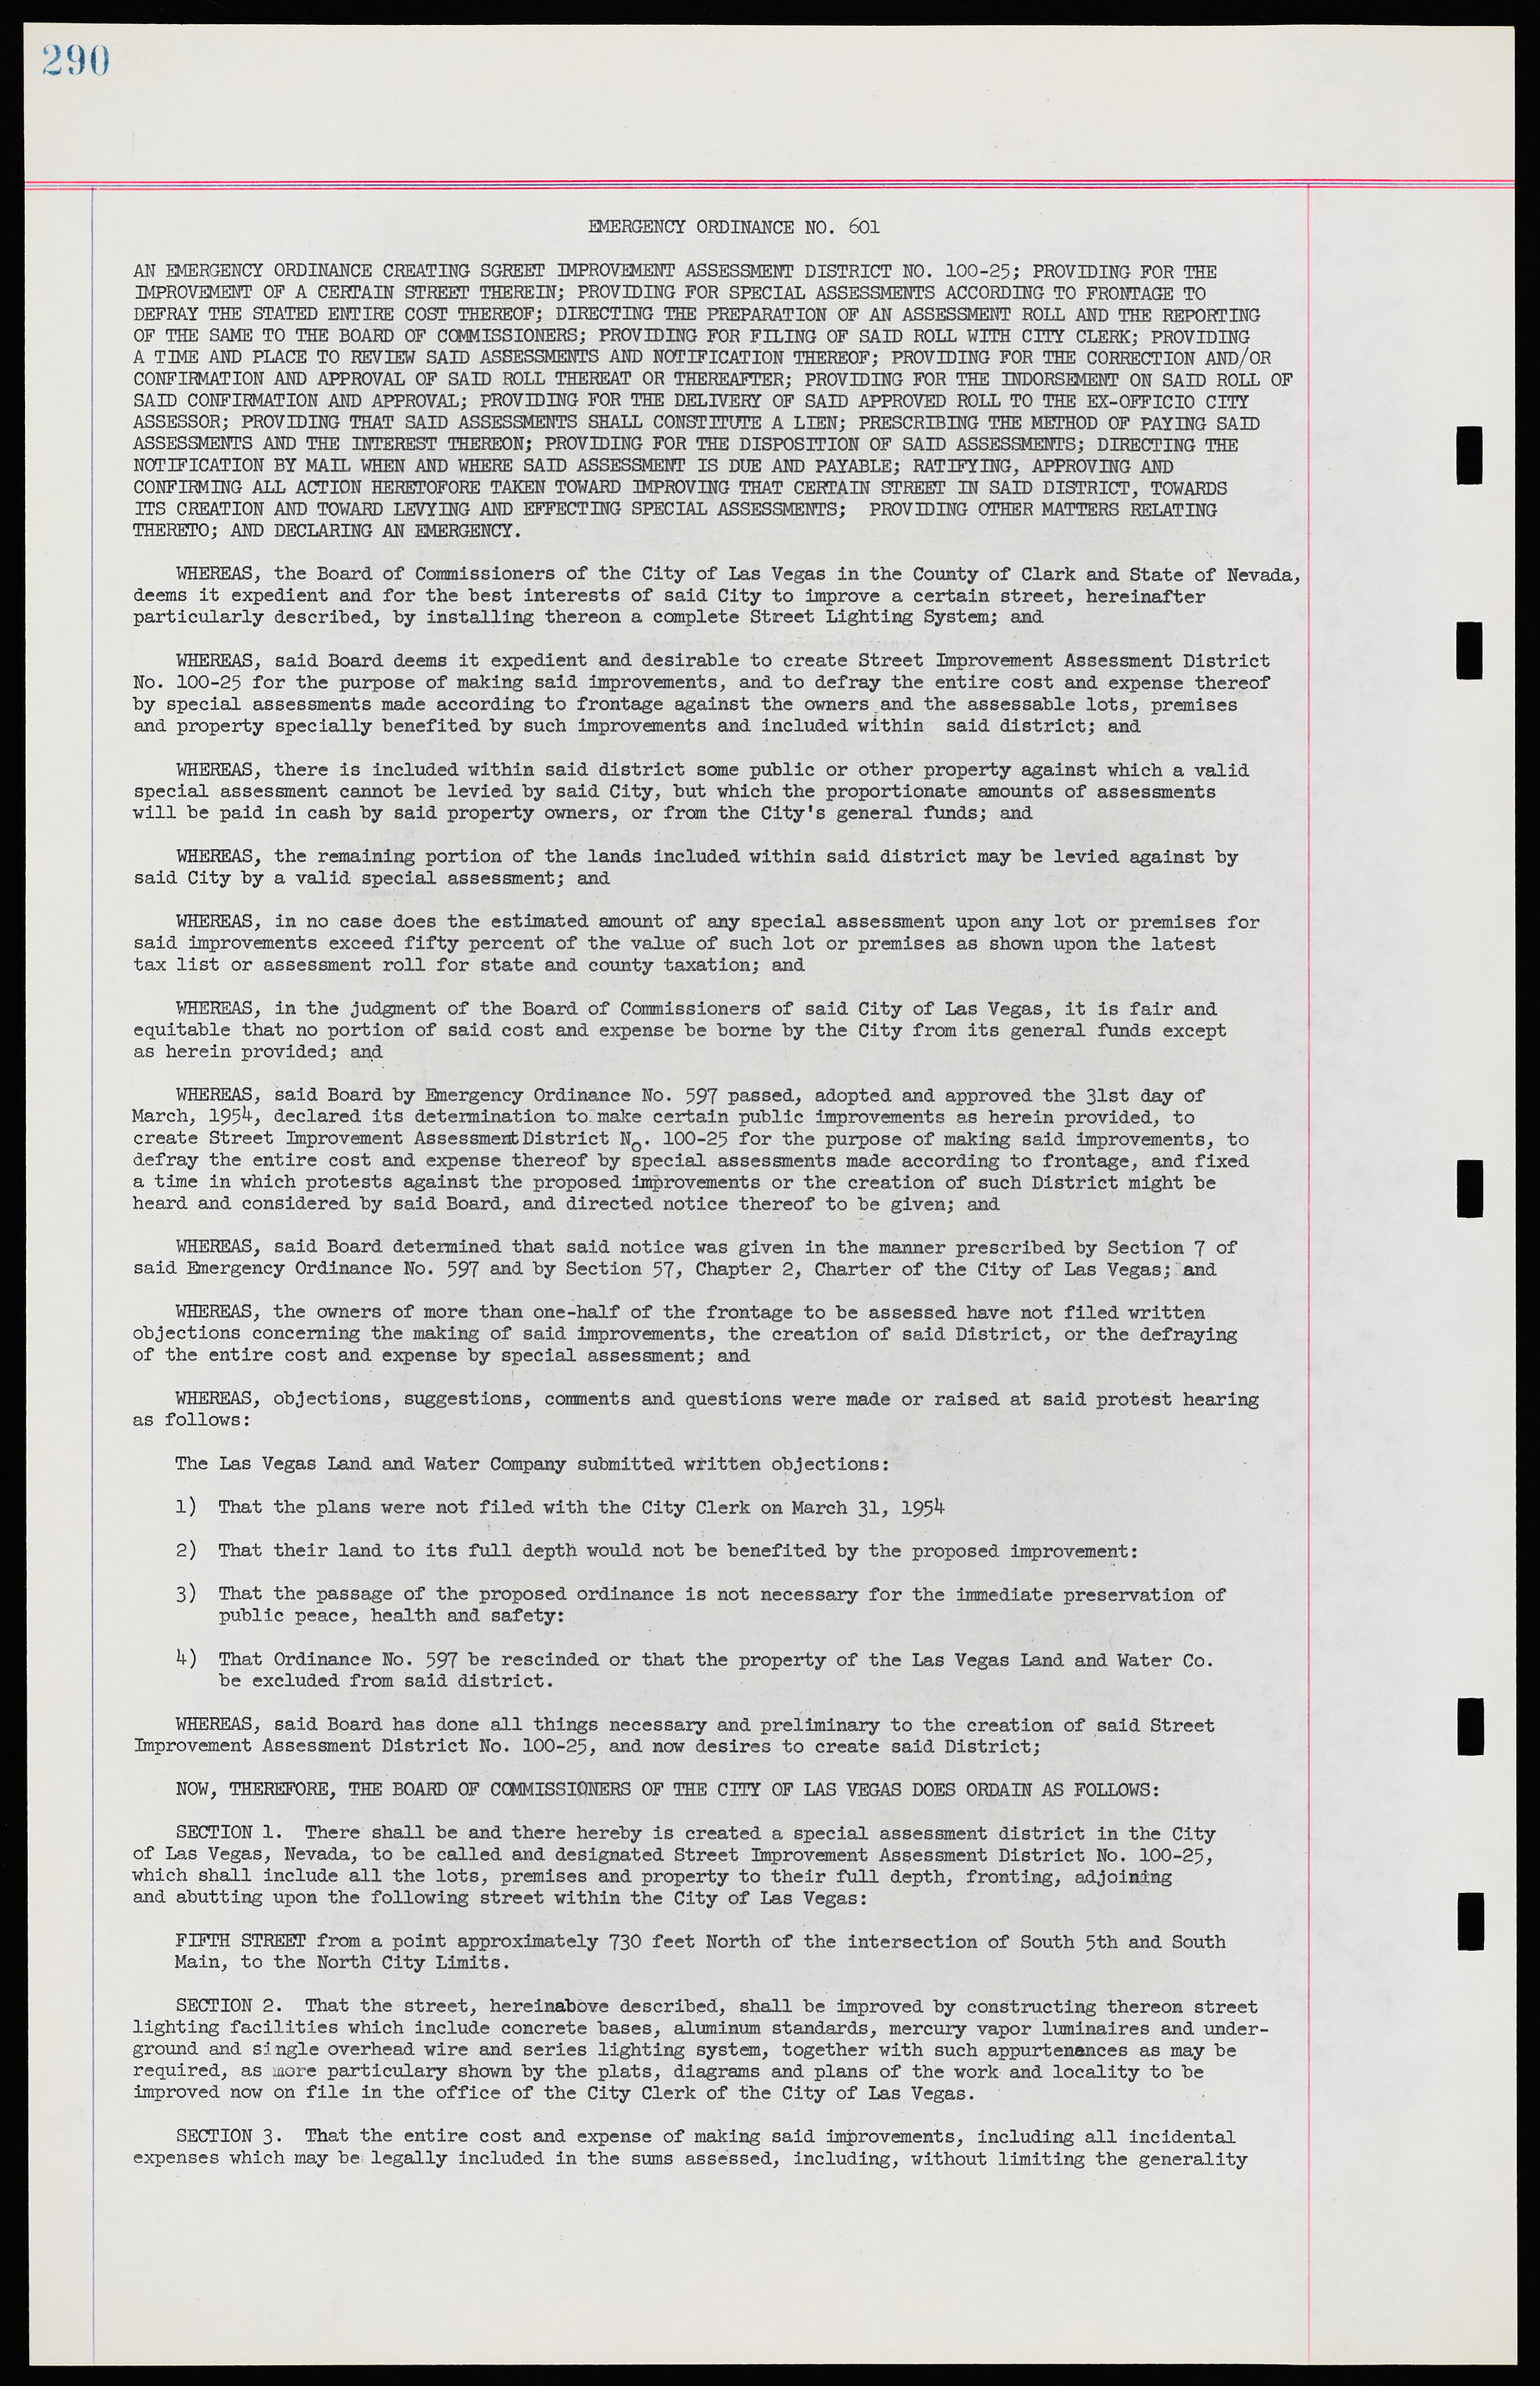 Las Vegas City Ordinances, November 13, 1950 to August 6, 1958, lvc000015-298